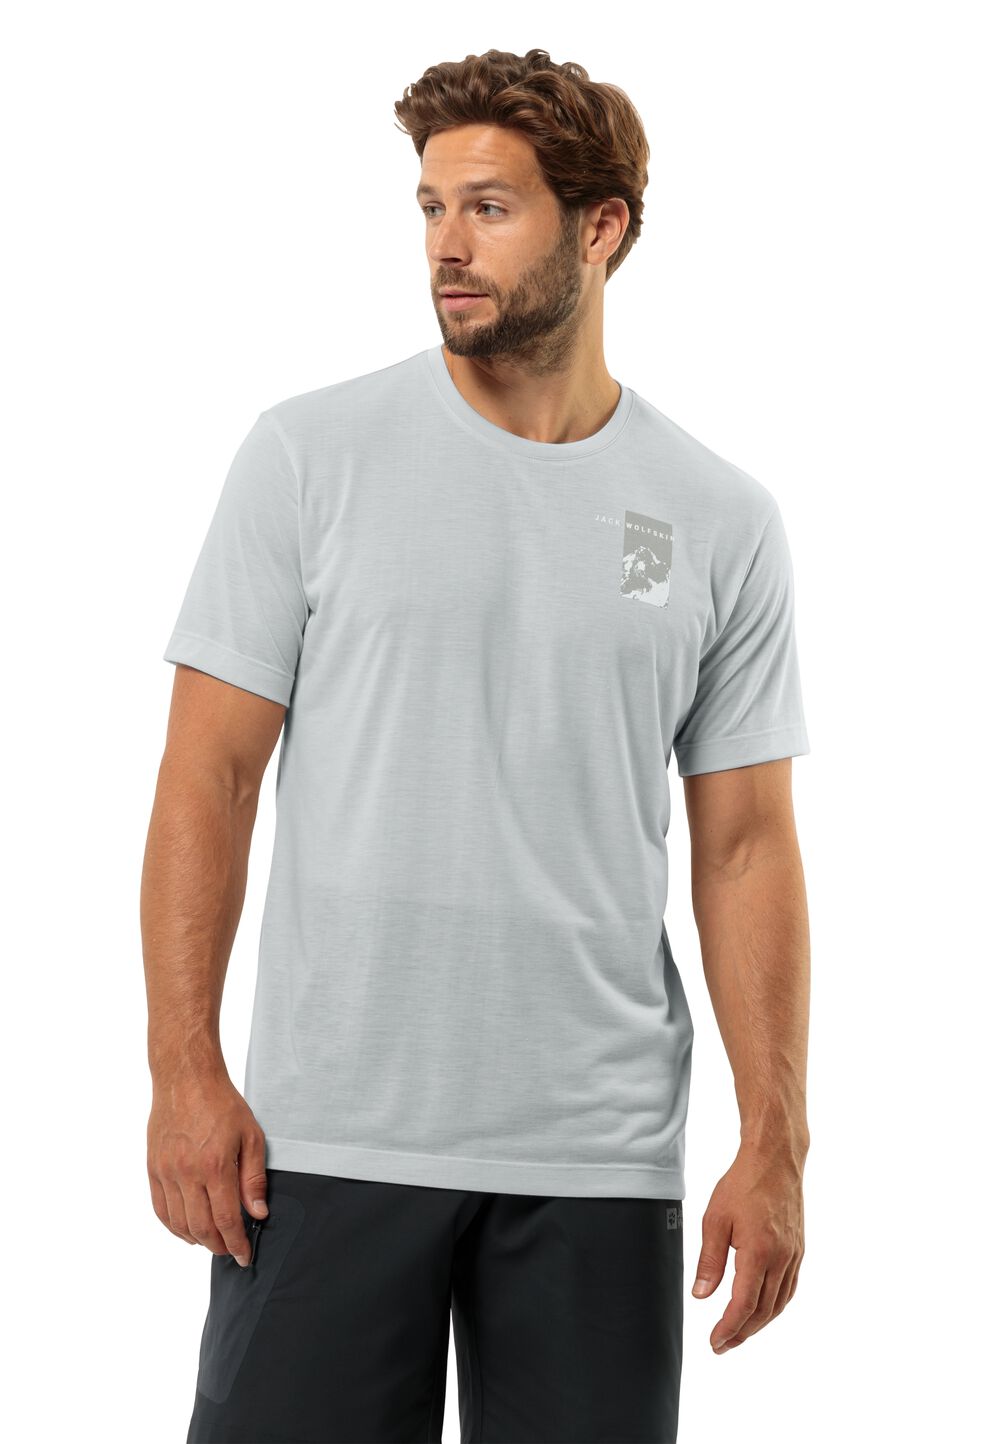 Jack Wolfskin Vonnan S S Graphic T-Shirt Men Functioneel shirt Heren 3XL grijs cool grey